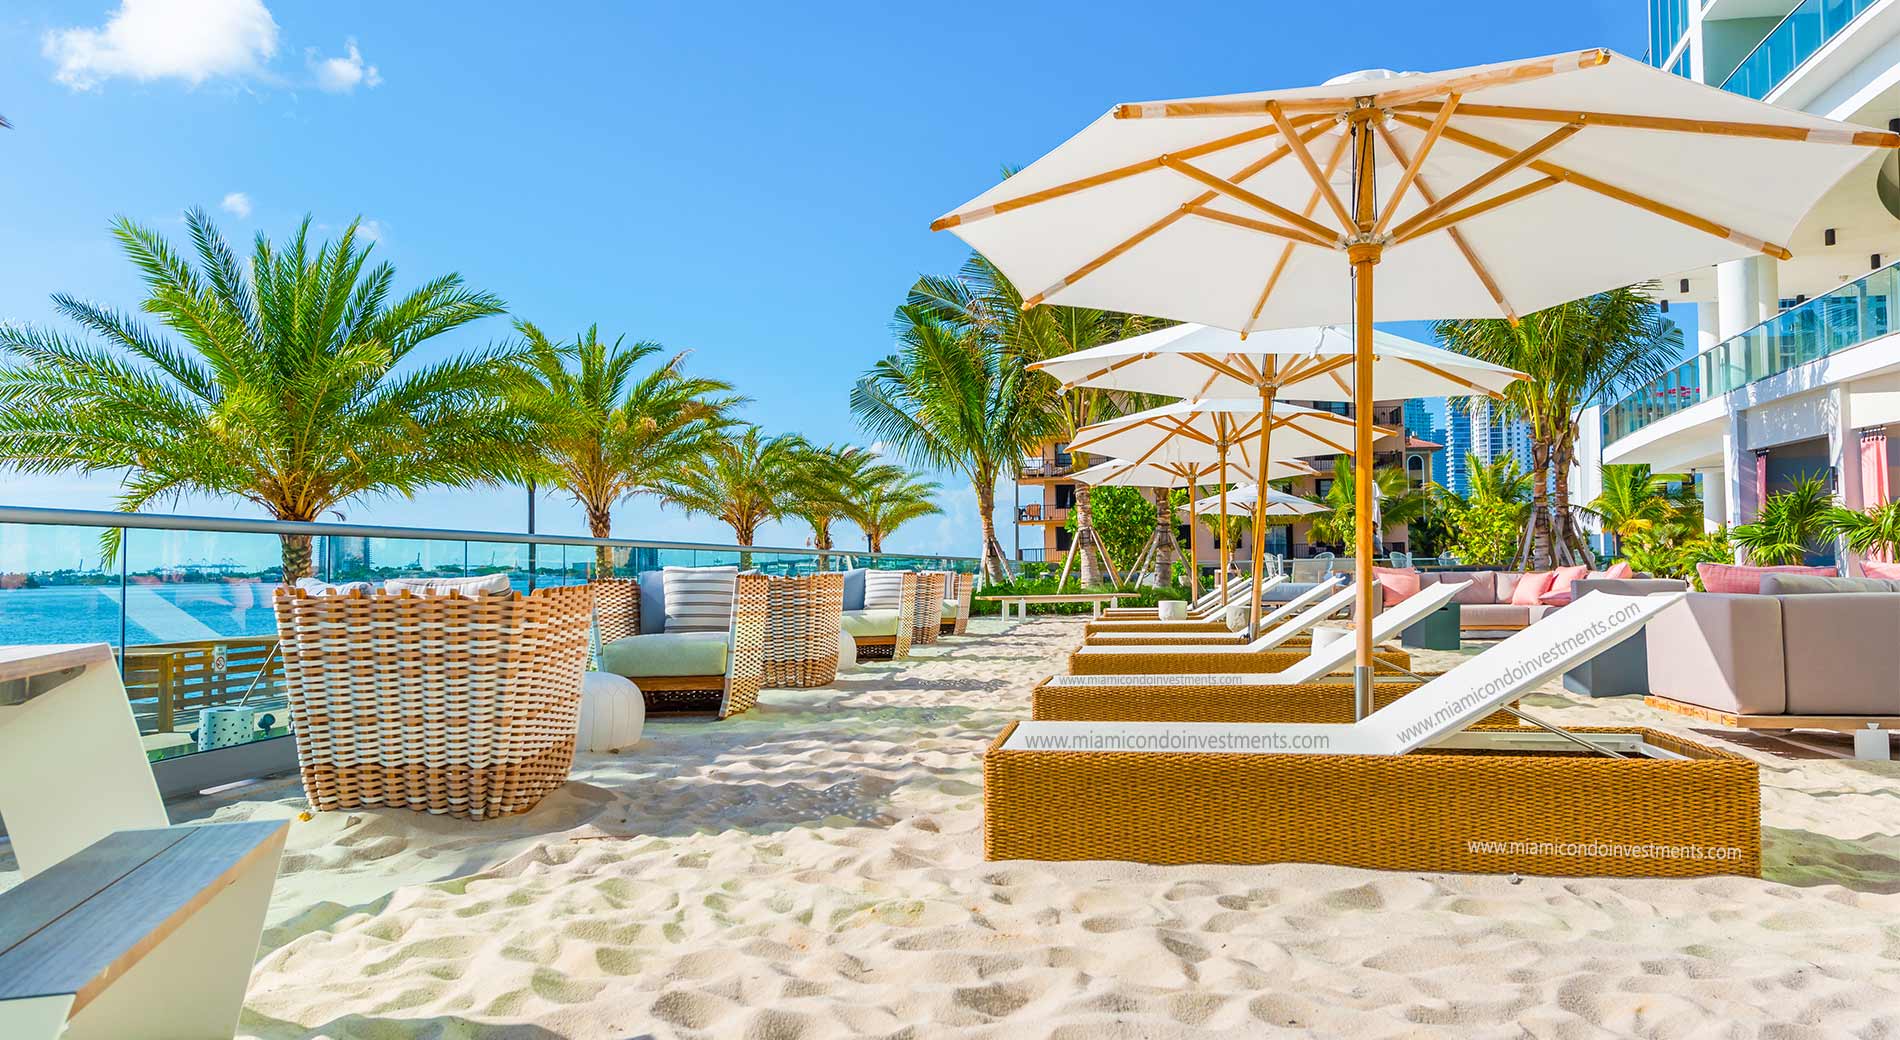 Introducing the Biscayne Beach Miami Condos Website